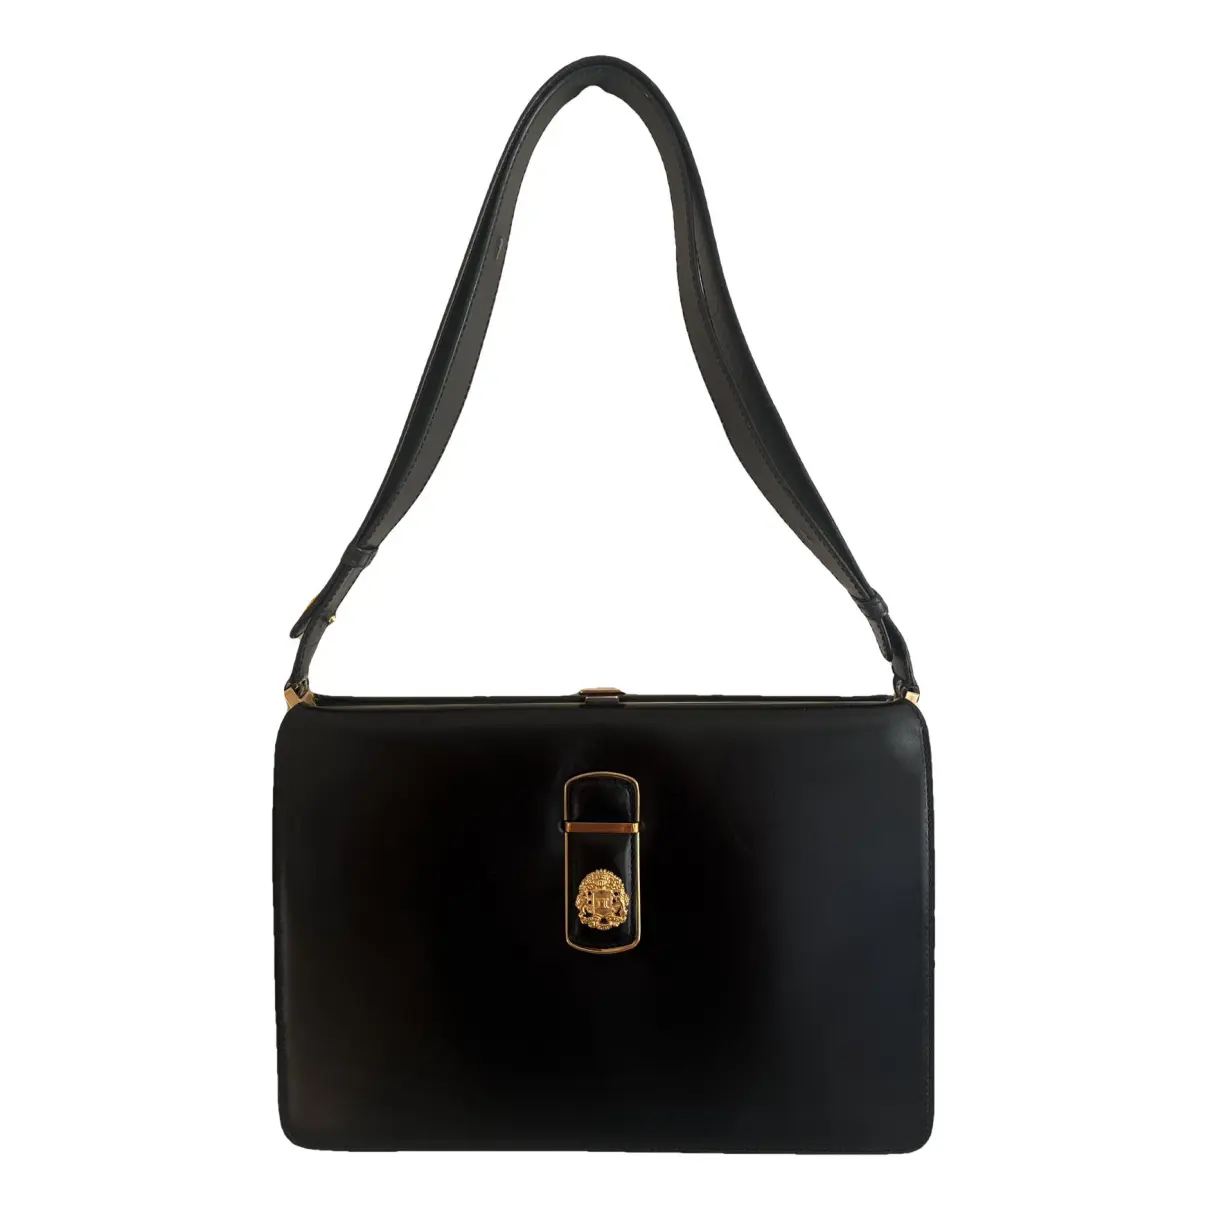 Clasp leather handbag